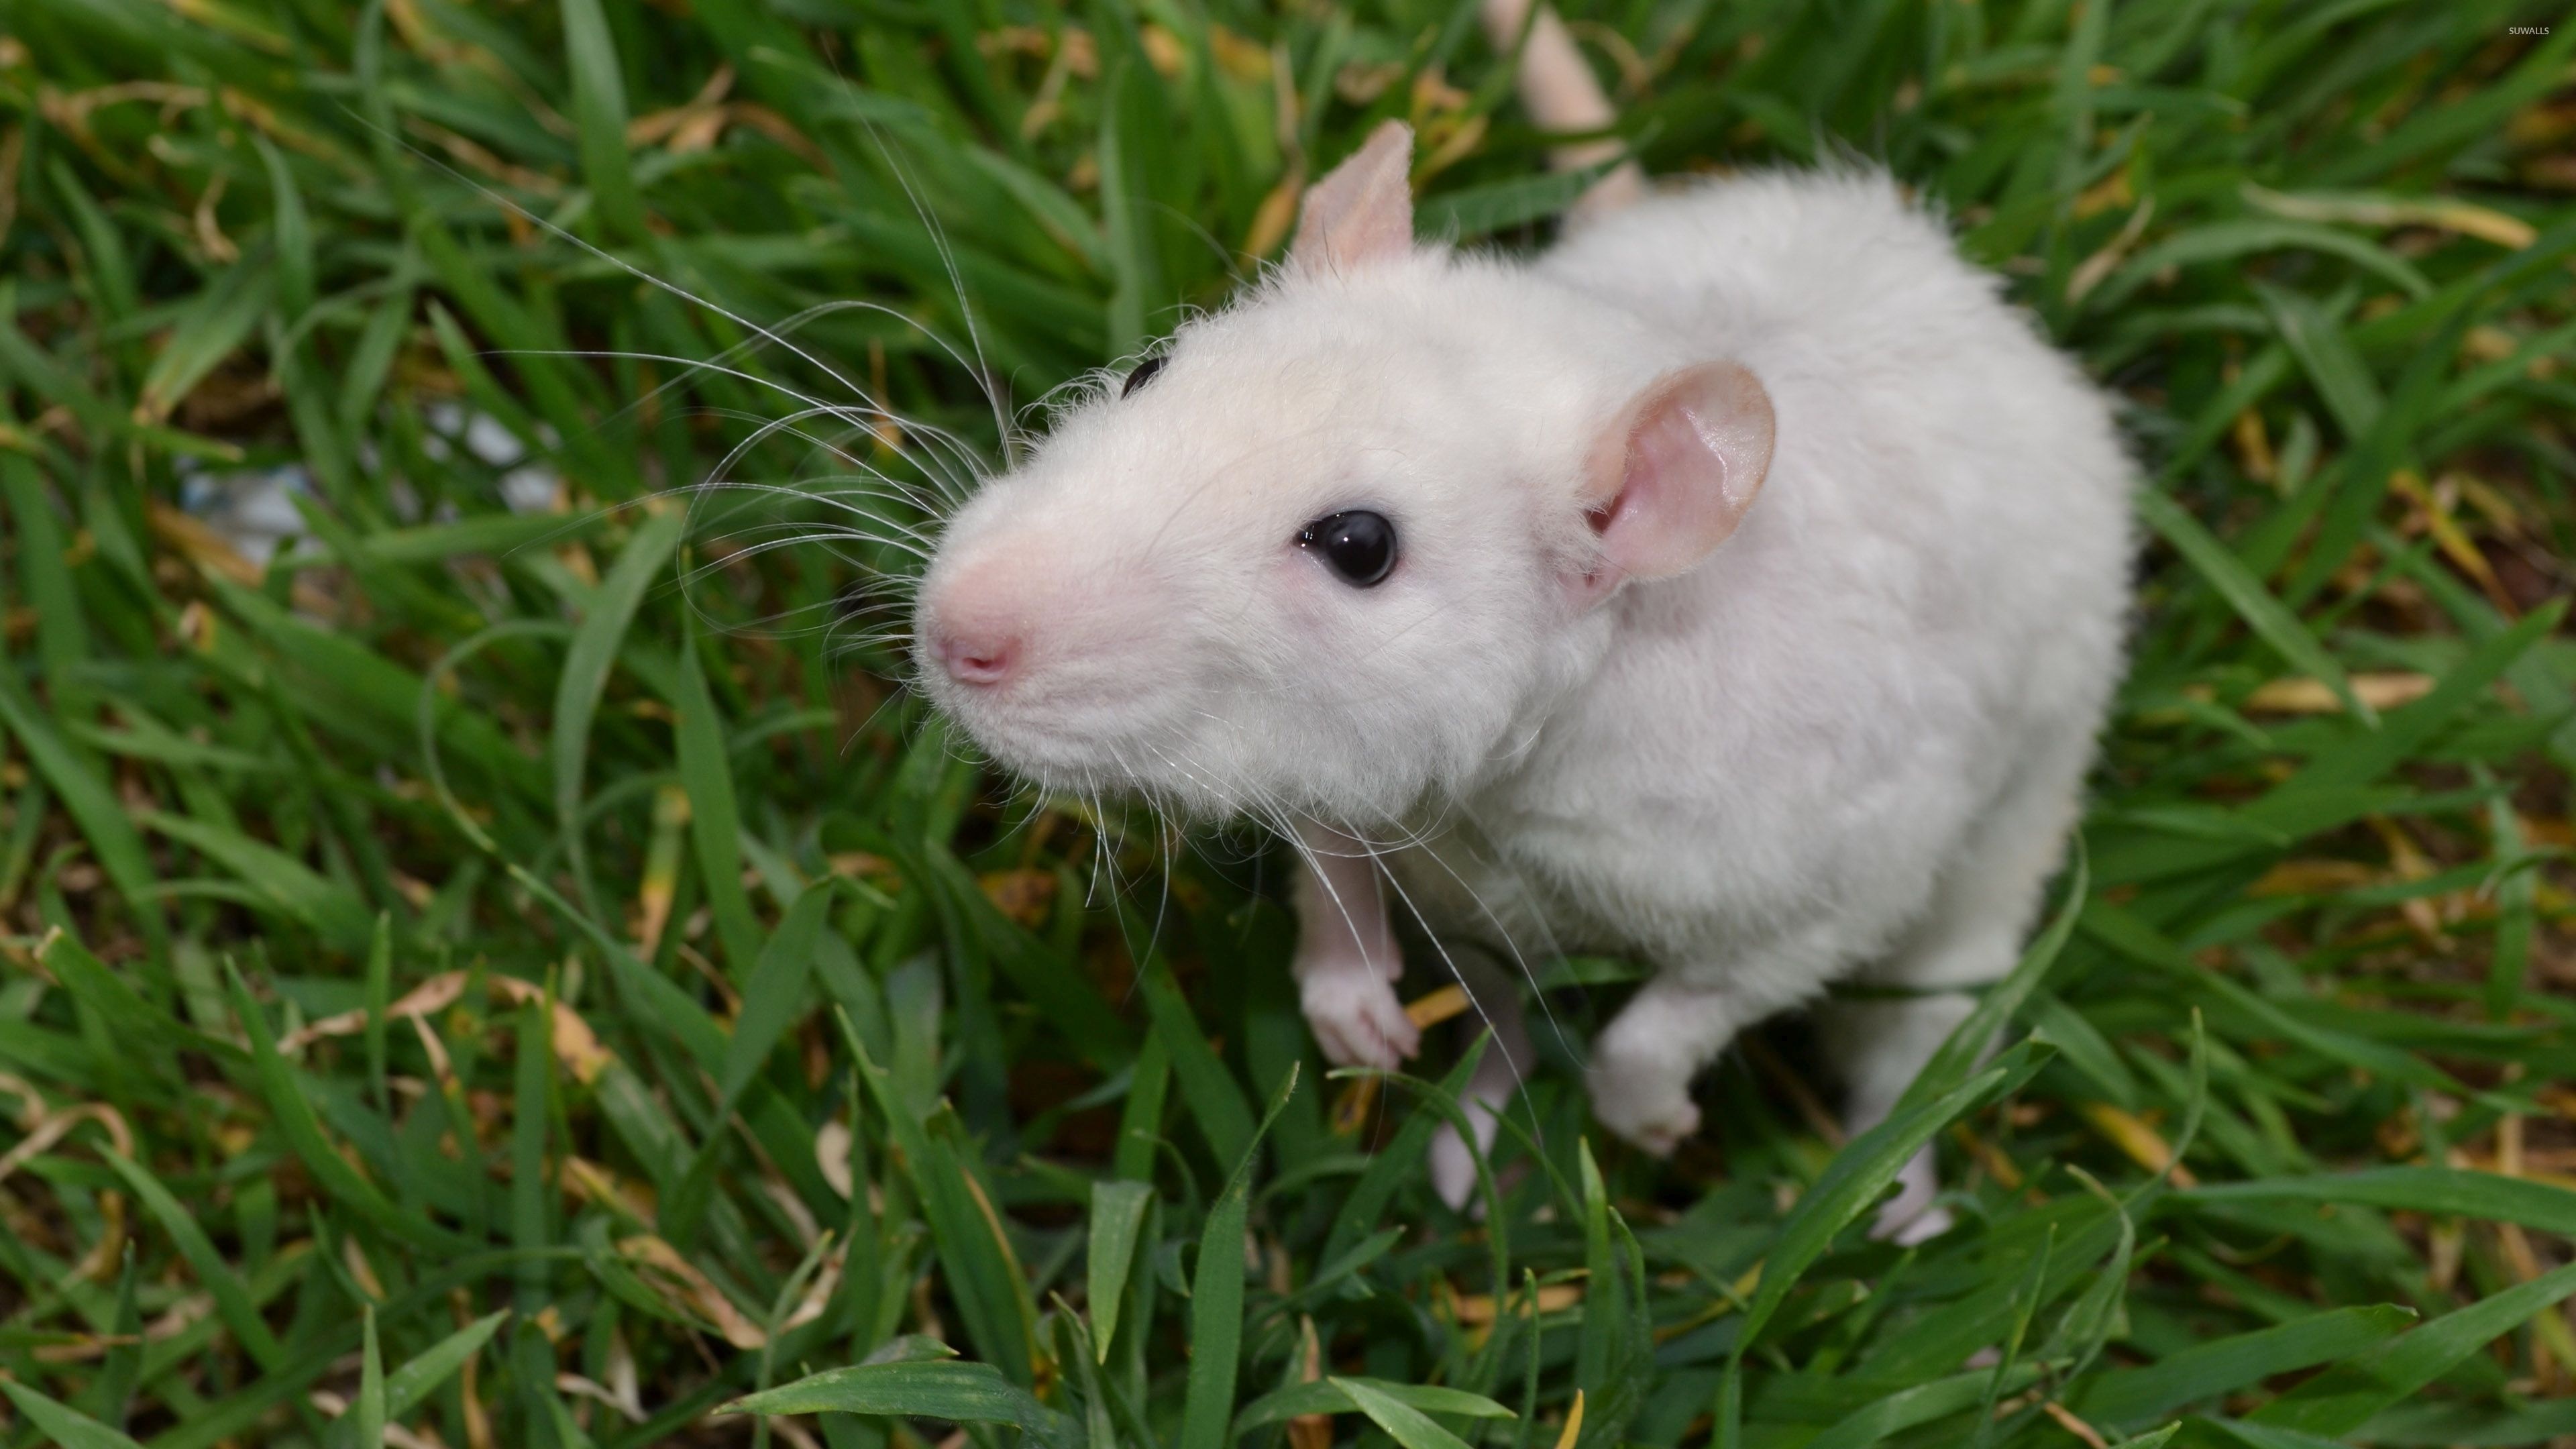 Little white mouse, Grassy habitat, Cute rodents, Animal wallpapers, 3840x2160 4K Desktop